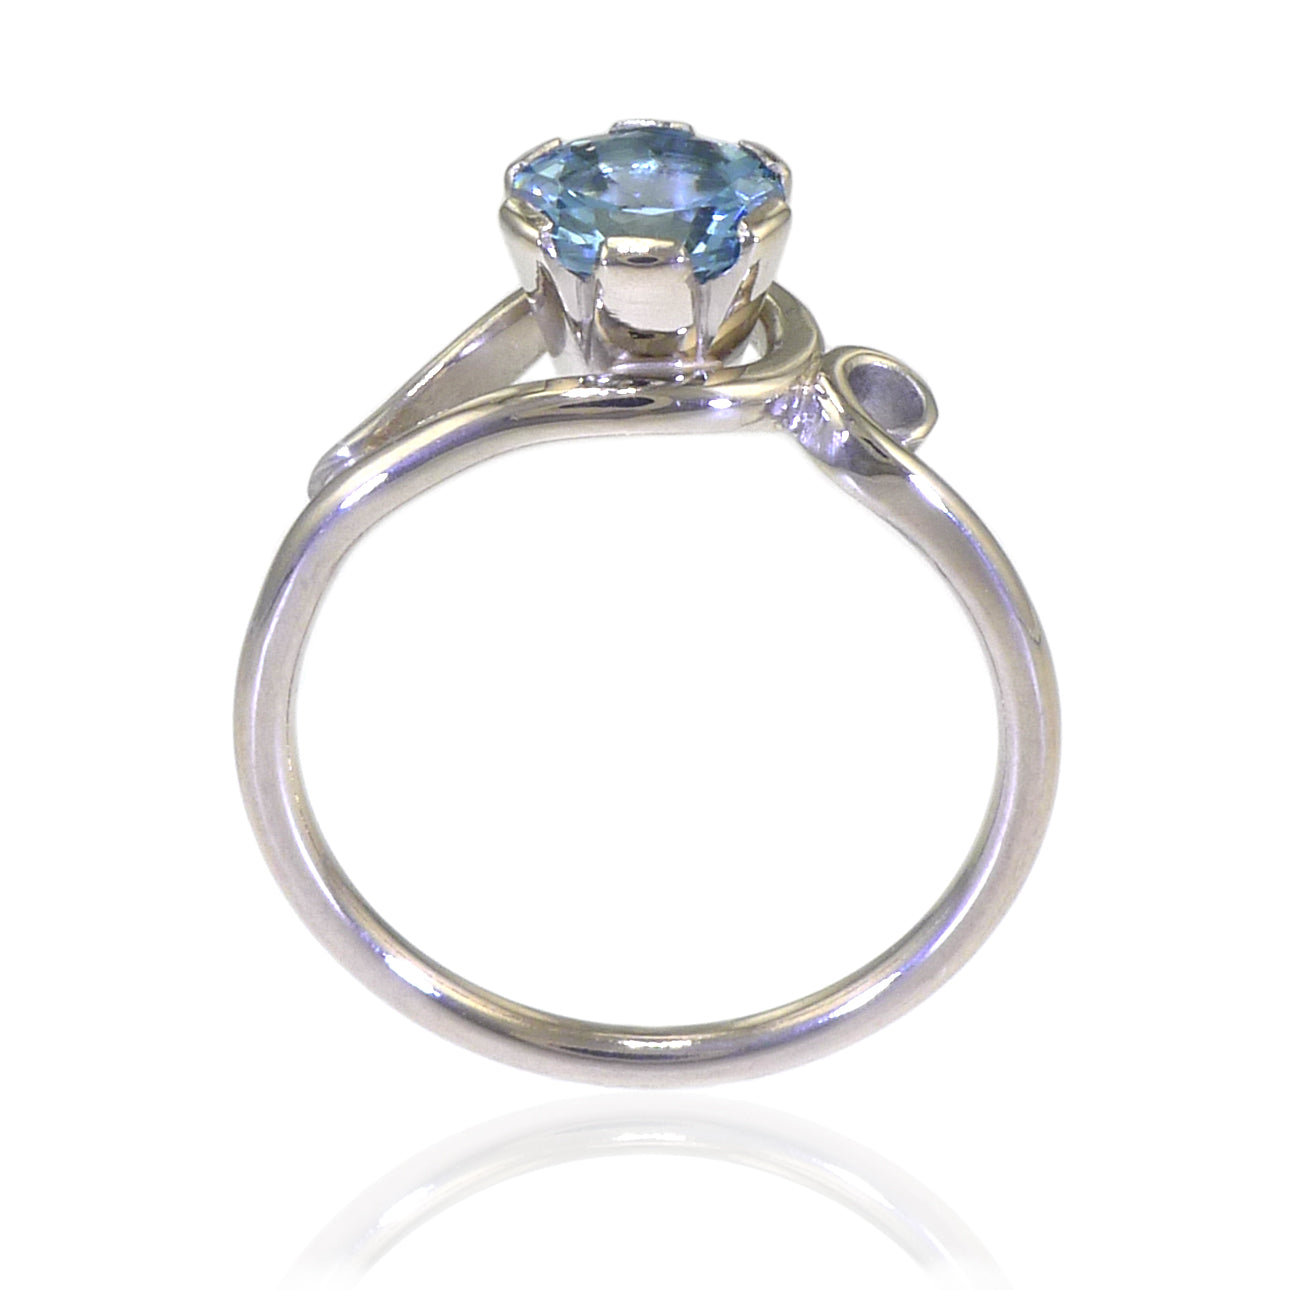 Aquamarine Ring in Art Nouveau Style